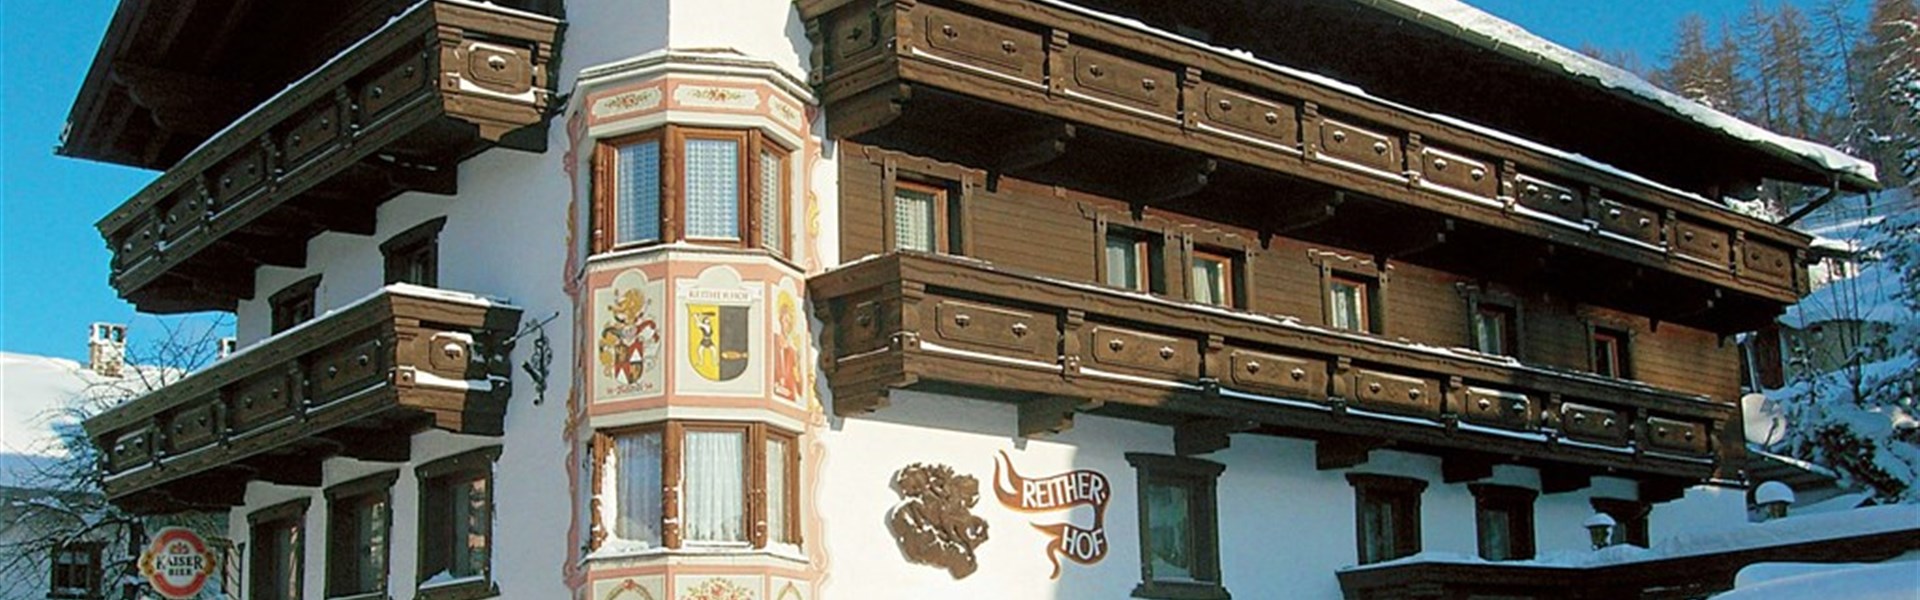 Marco Polo - Gasthof Reitherhof (W) - 